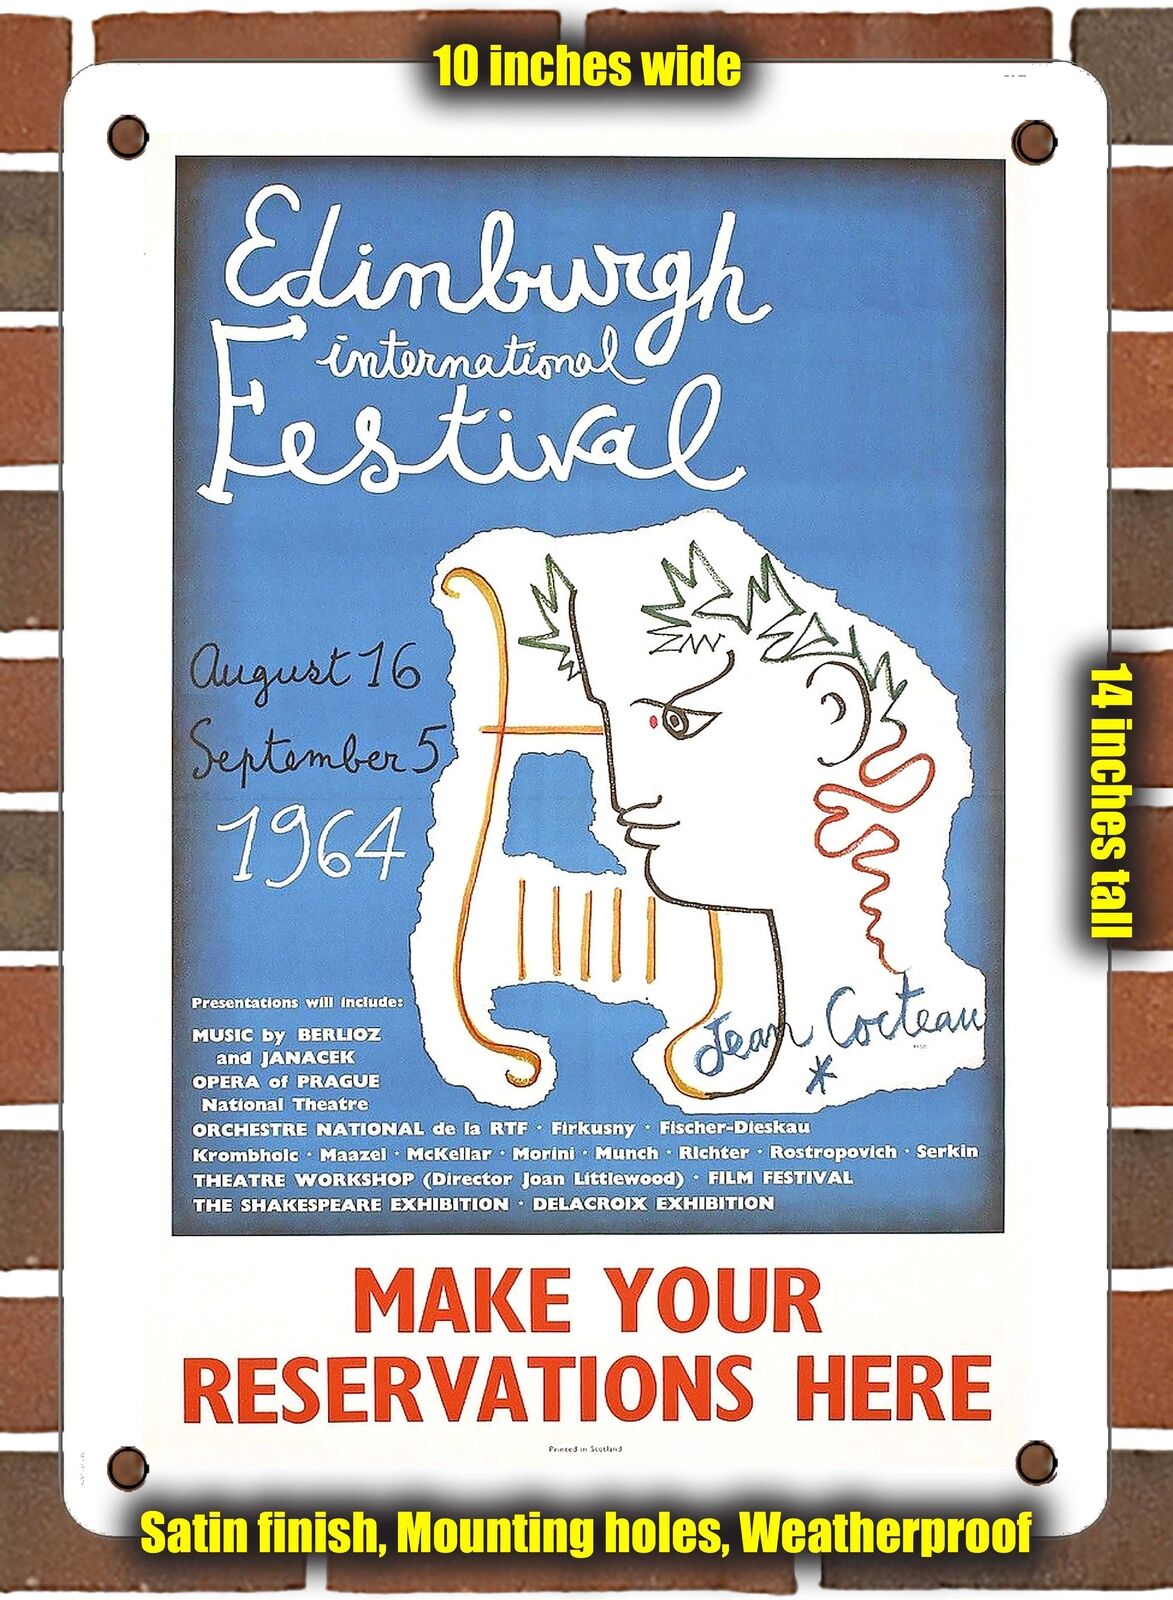 METAL SIGN - 1964 Edinburgh International Festival - 10x14 Inches